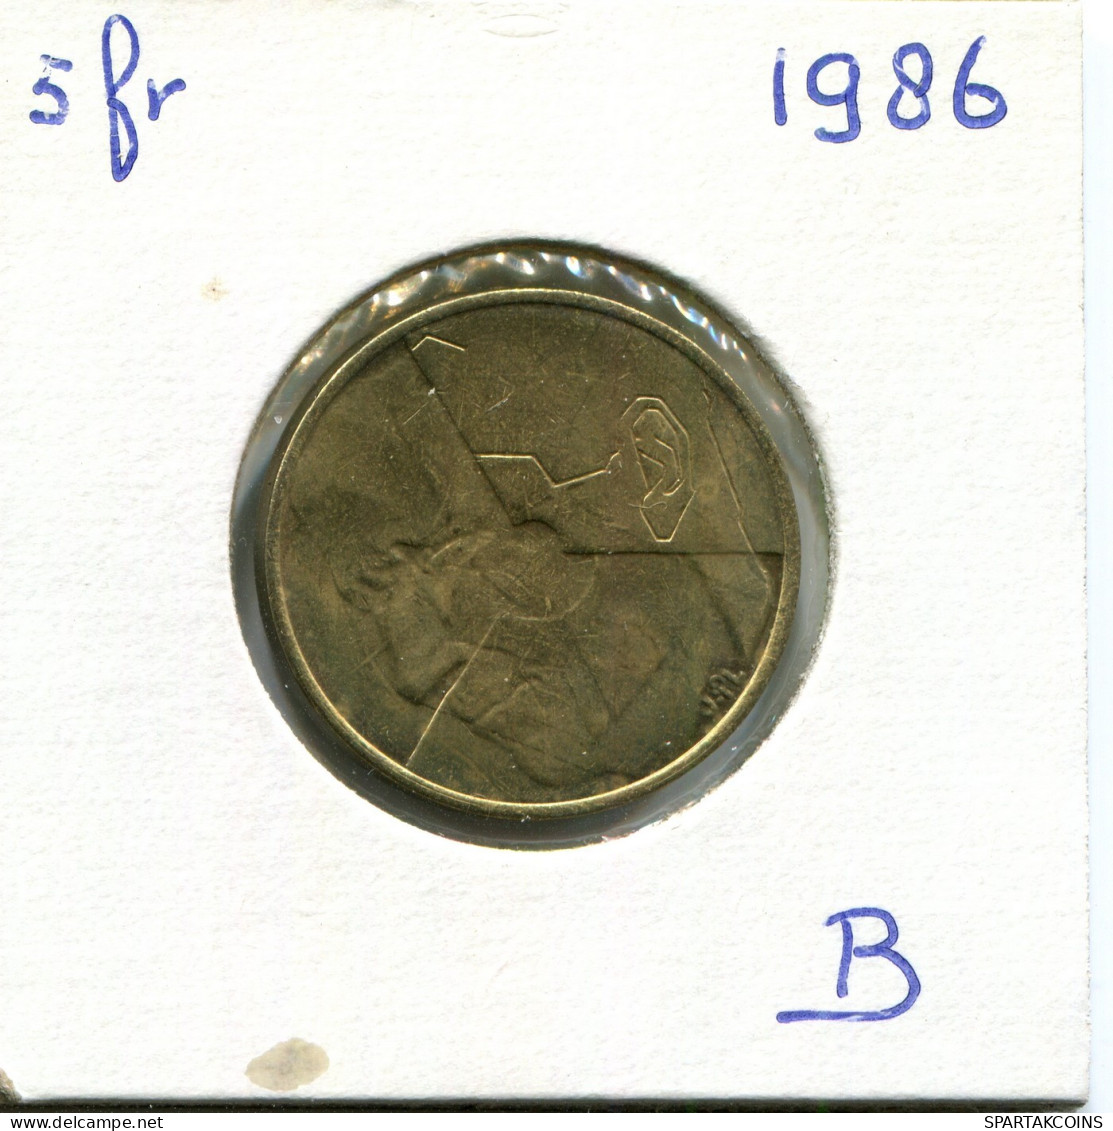 5 FRANCS 1986 DUTCH Text BELGIUM Coin #AW884.U.A - 5 Frank